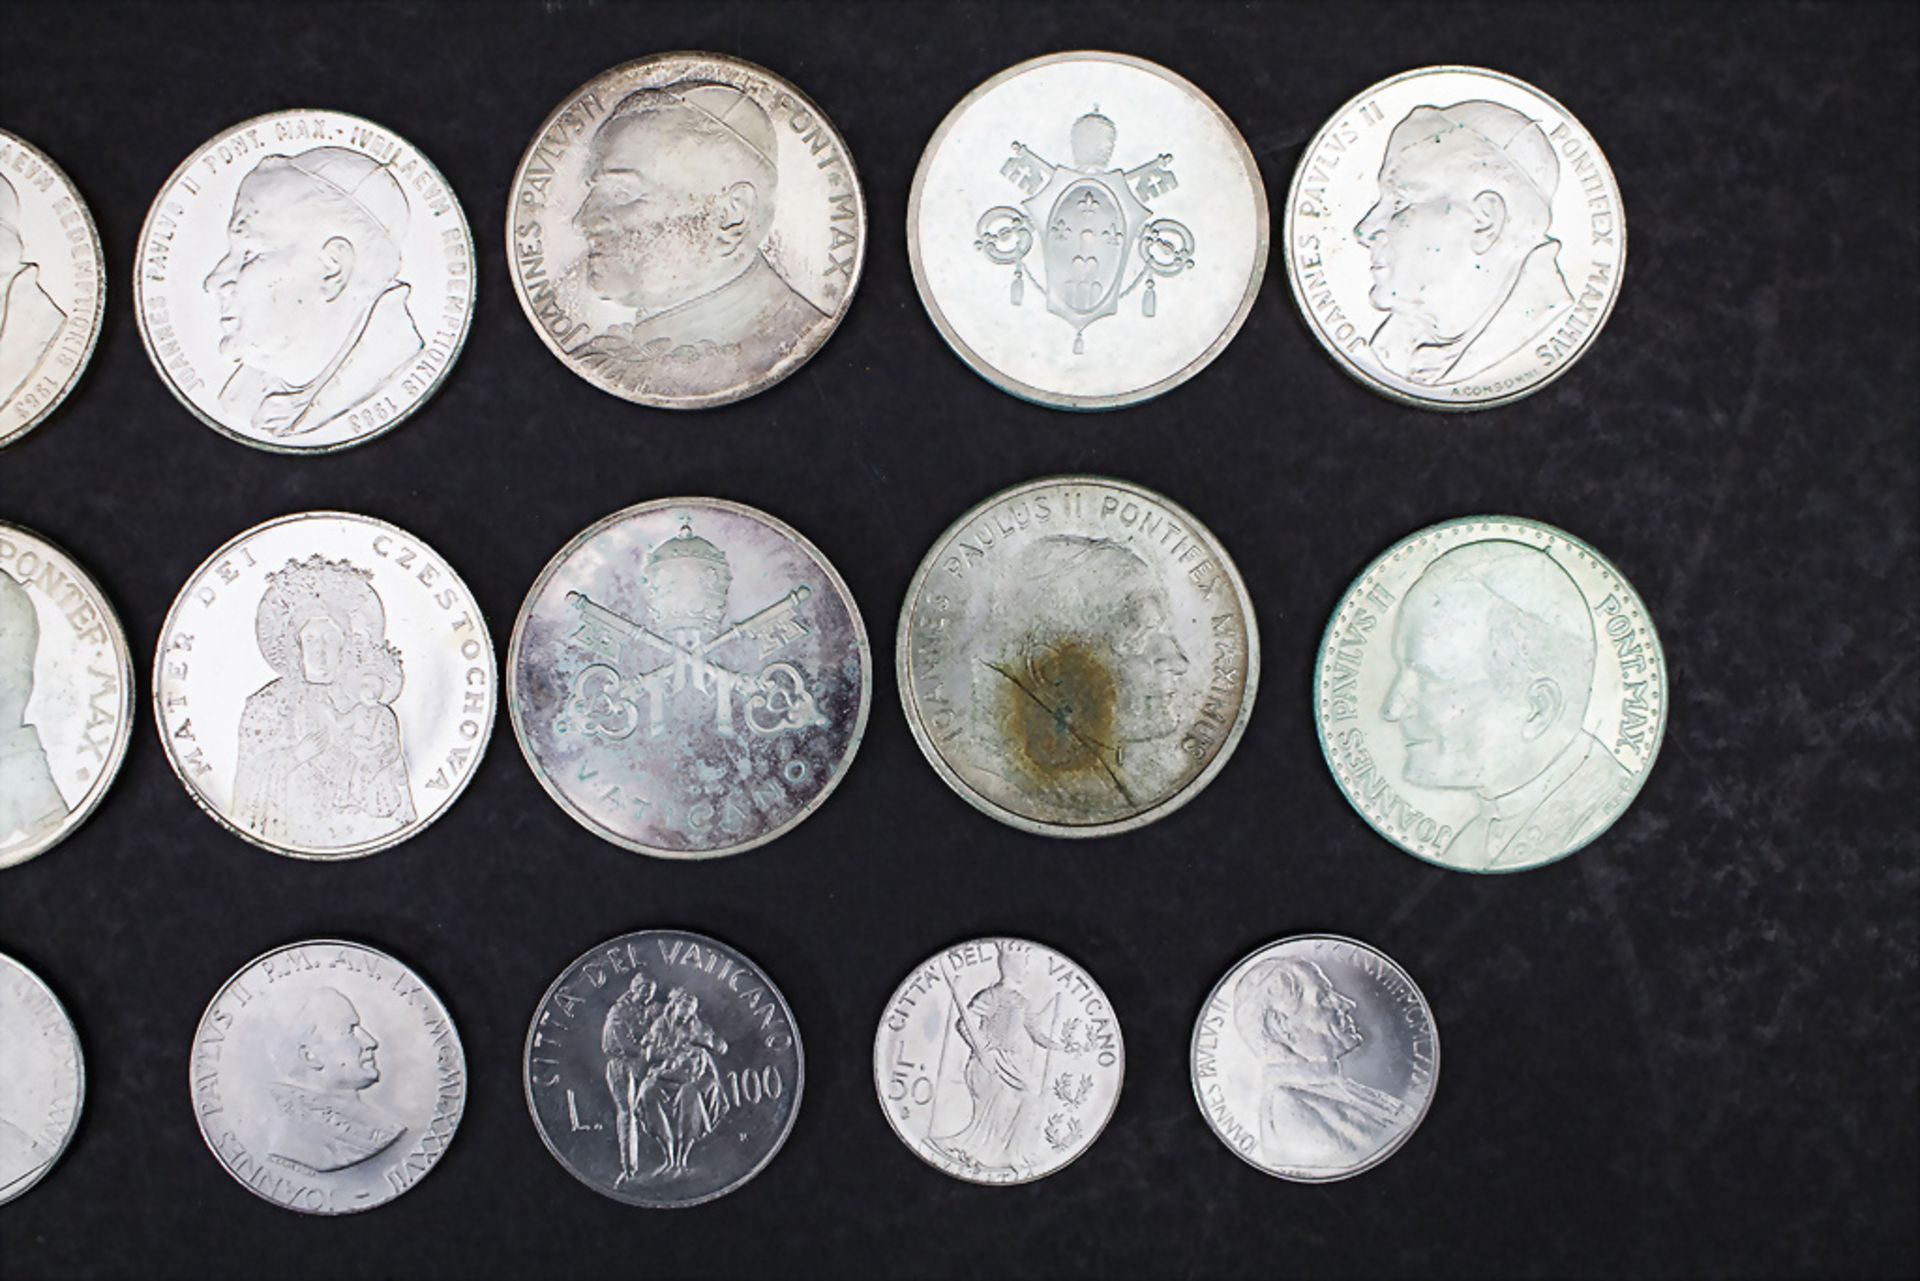 Sammlung Münzen und Medaillen des Vatikan / A collection of Vatican coins and medals - Image 8 of 10